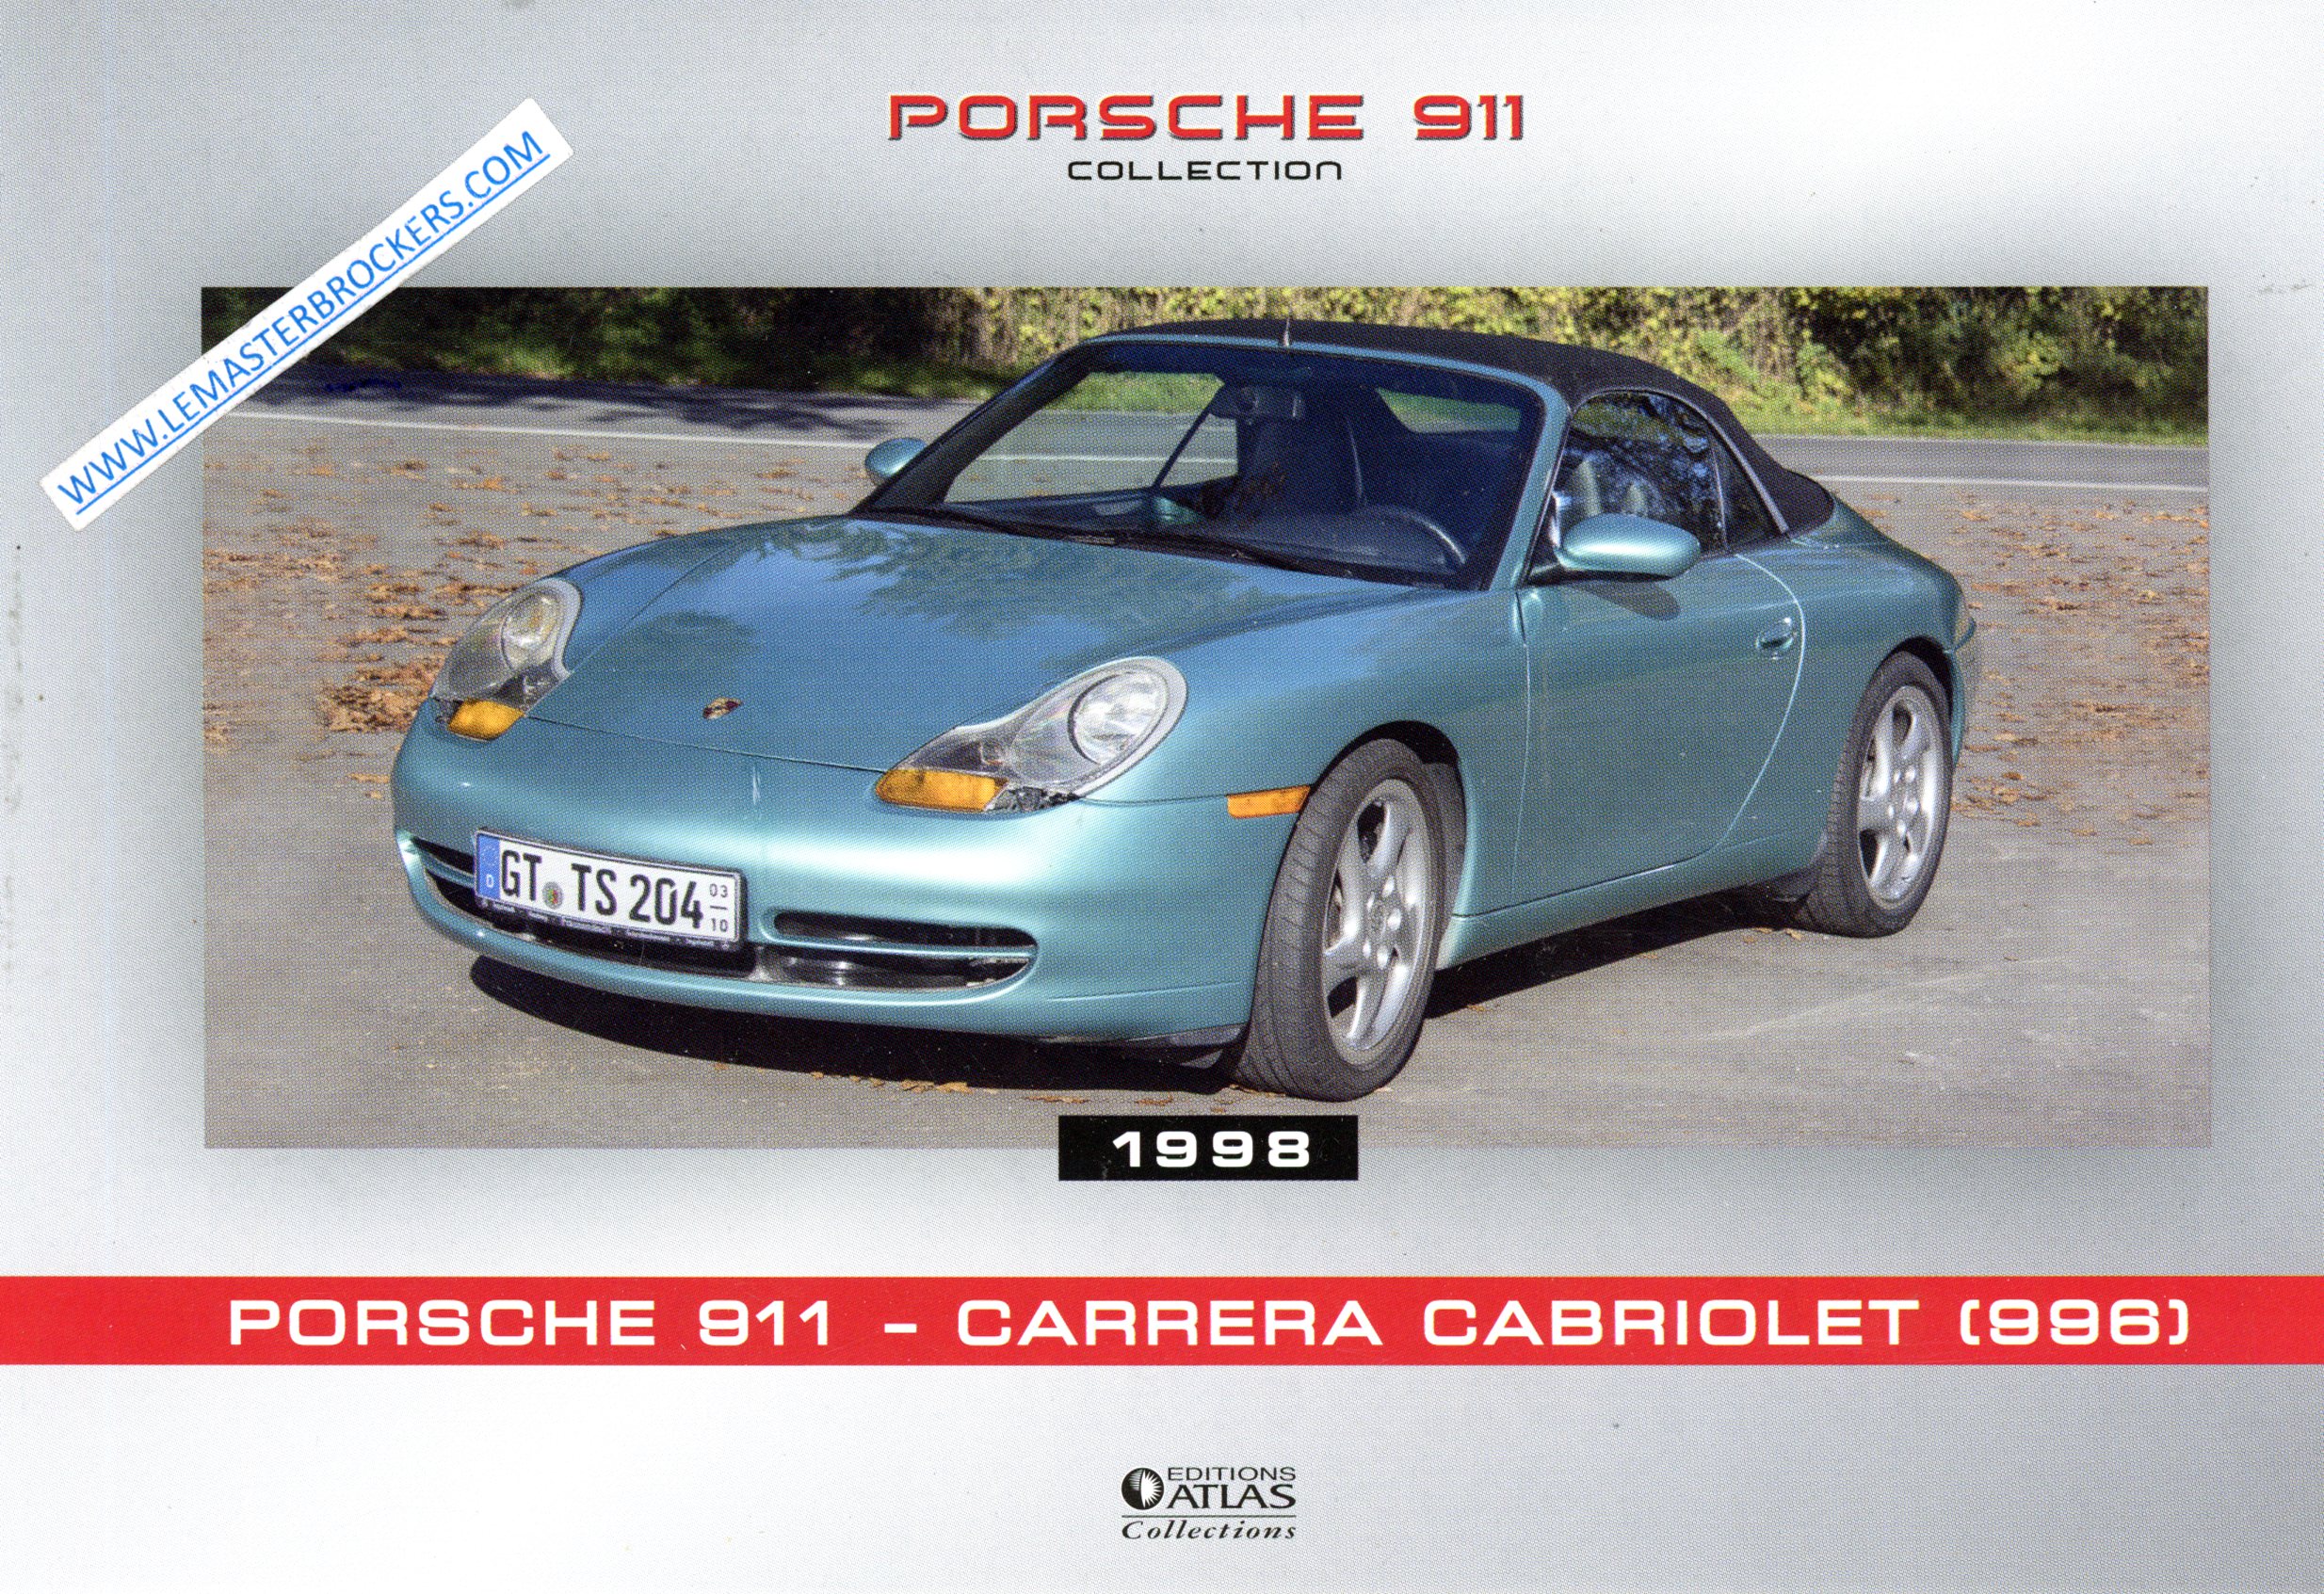 PORSCHE 911 CARRERA CABRIOLET 996 1998